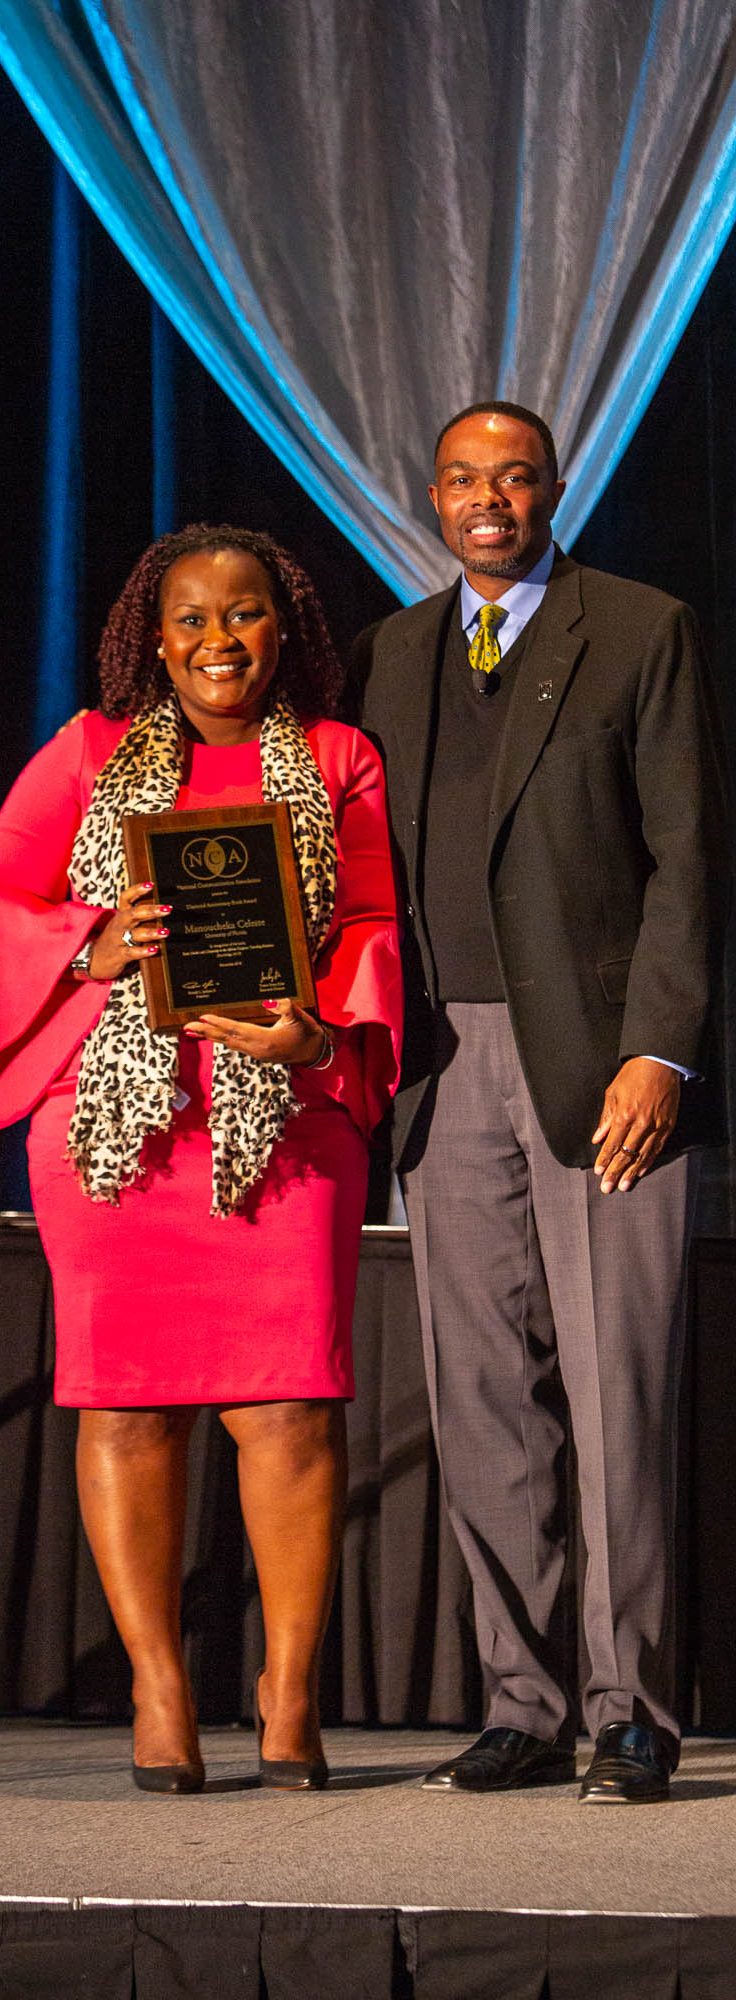 Dr. Manoucheka Celeste's National Communications Award